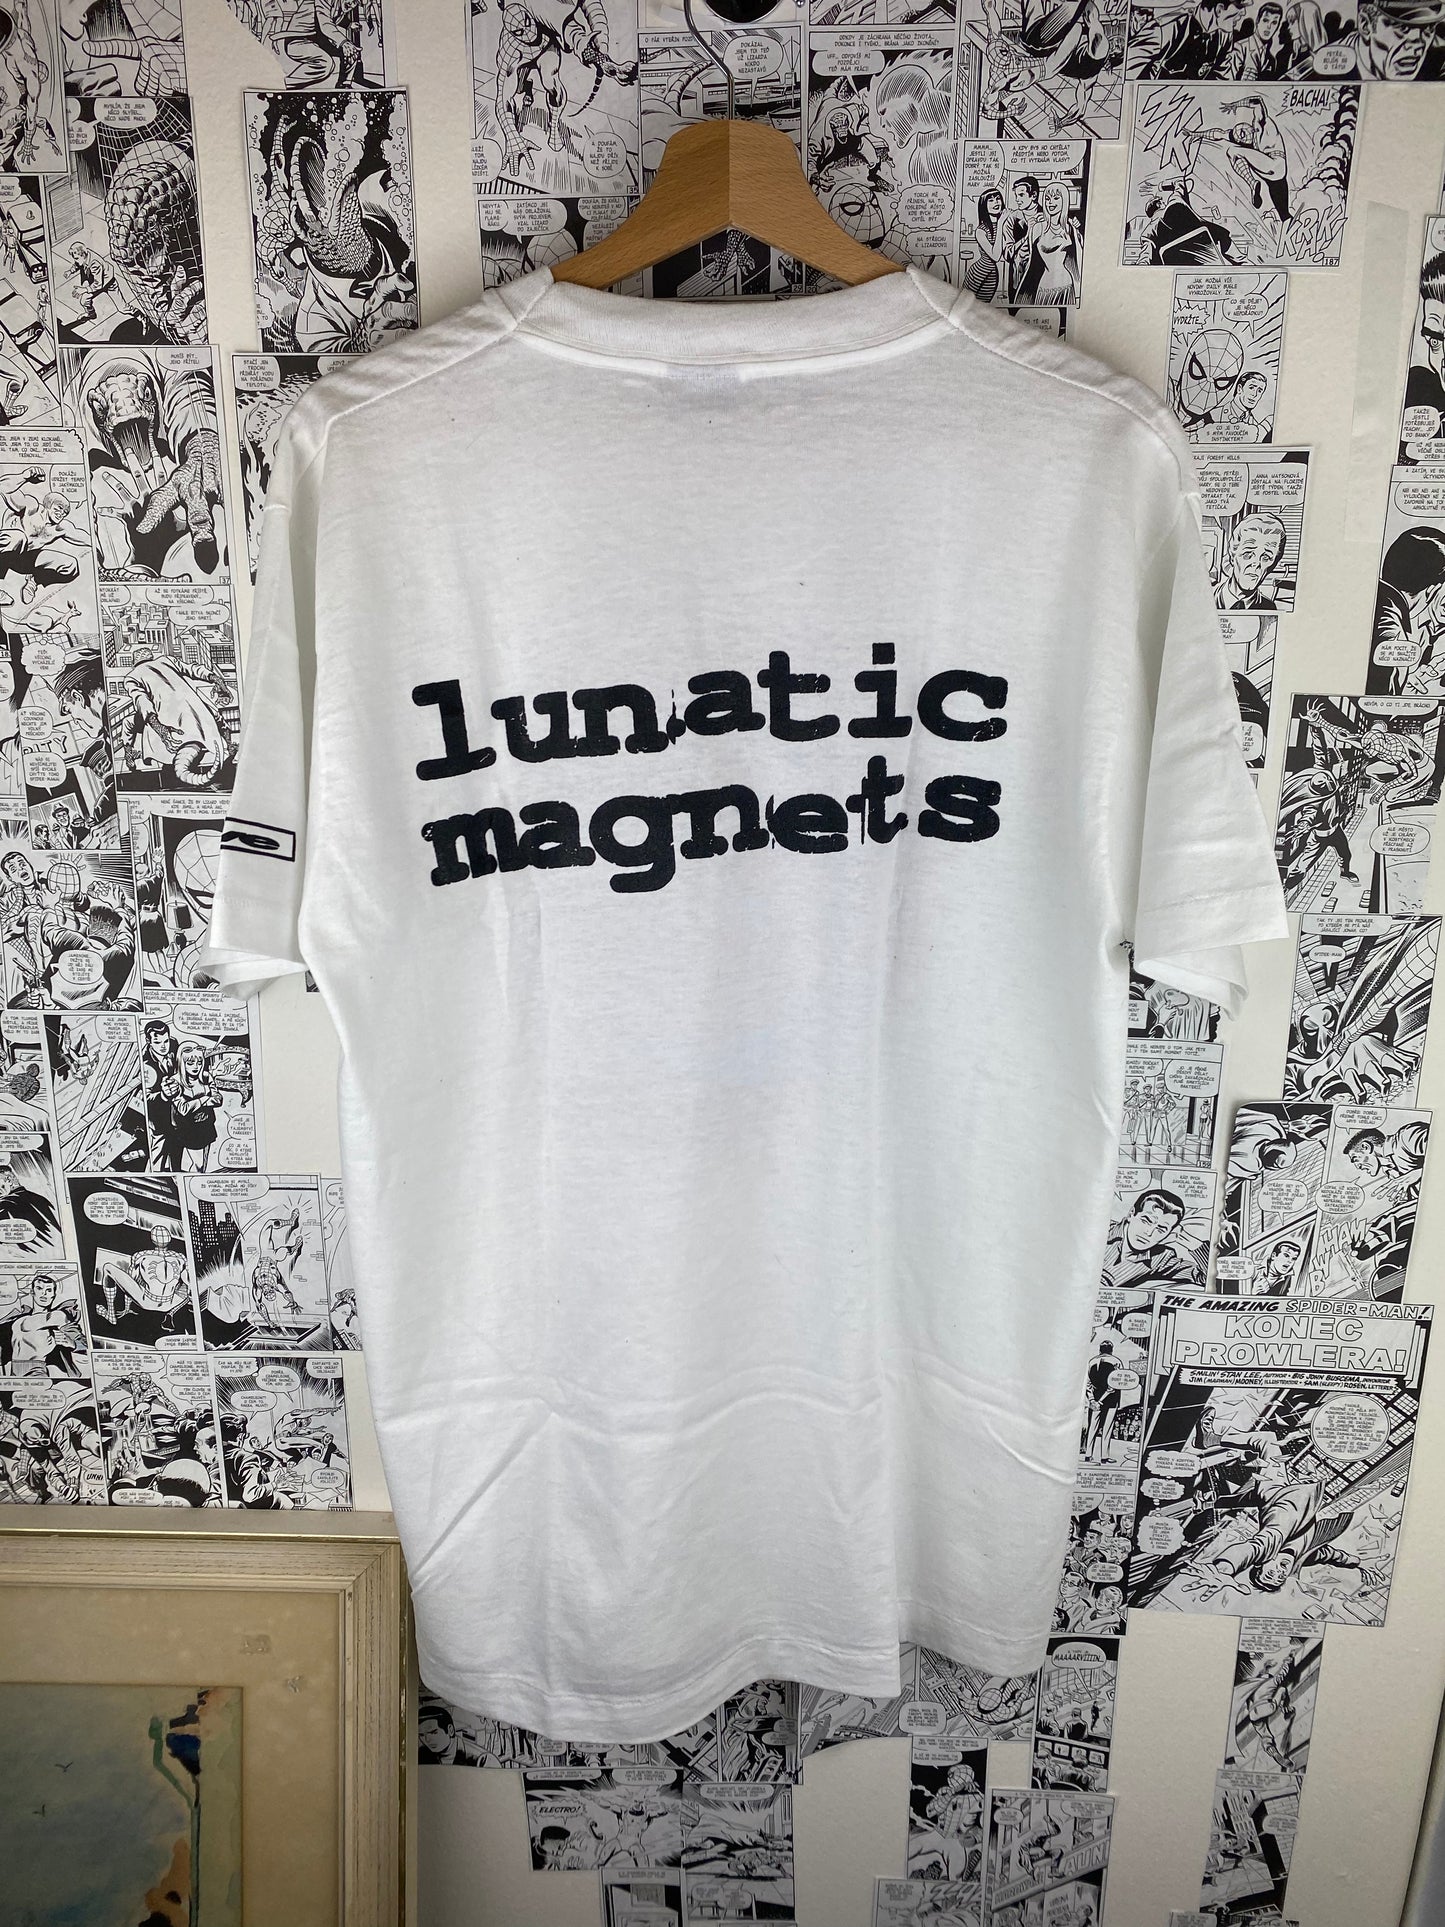 Vintage Ned’s Atomic Dustbin “Lunatic Magnets” - 1992 - t-shirt -size XL